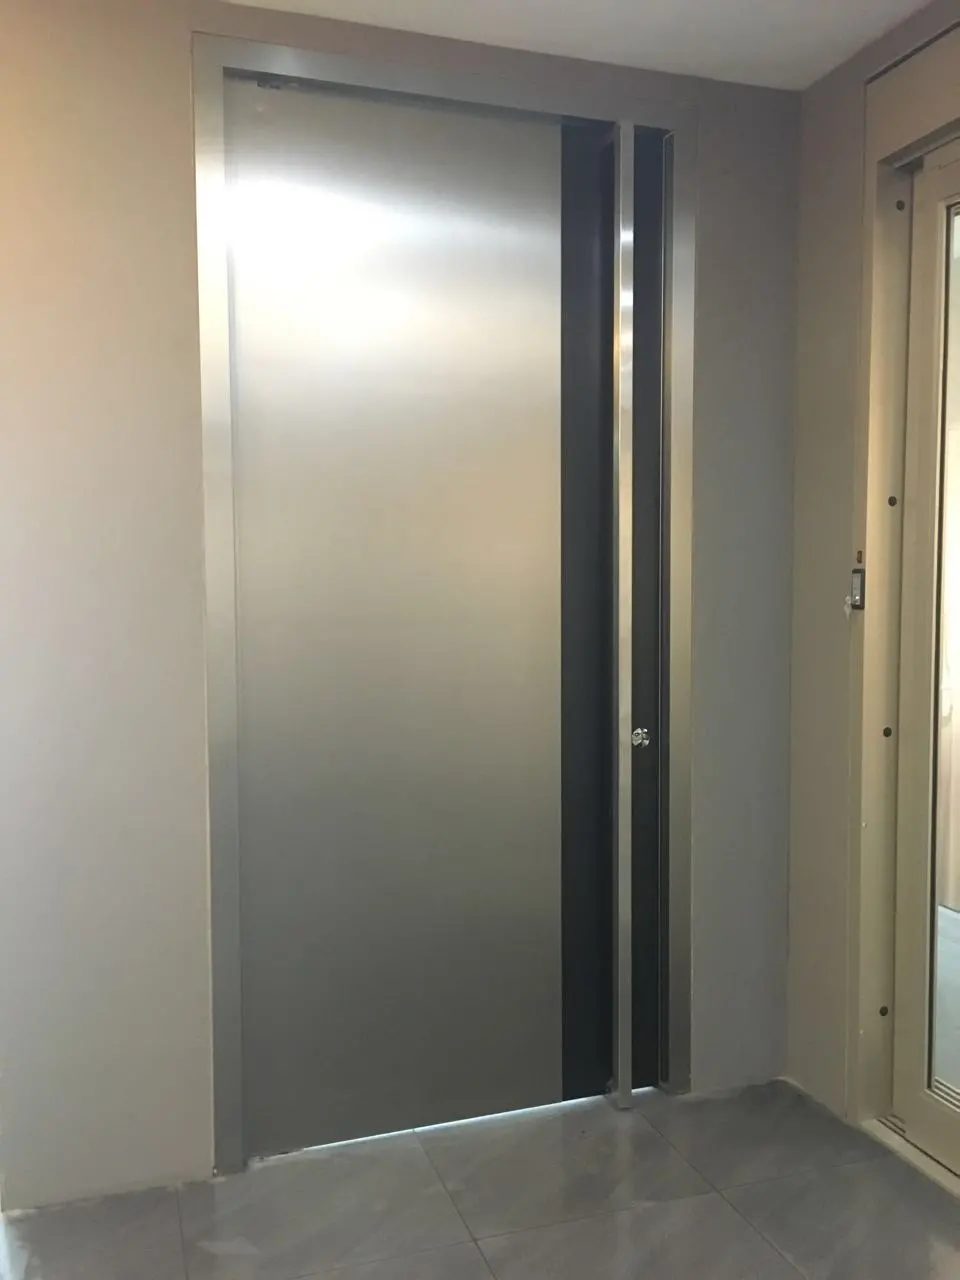 Stainless Steel Plate Internal Exterior Pivot Door